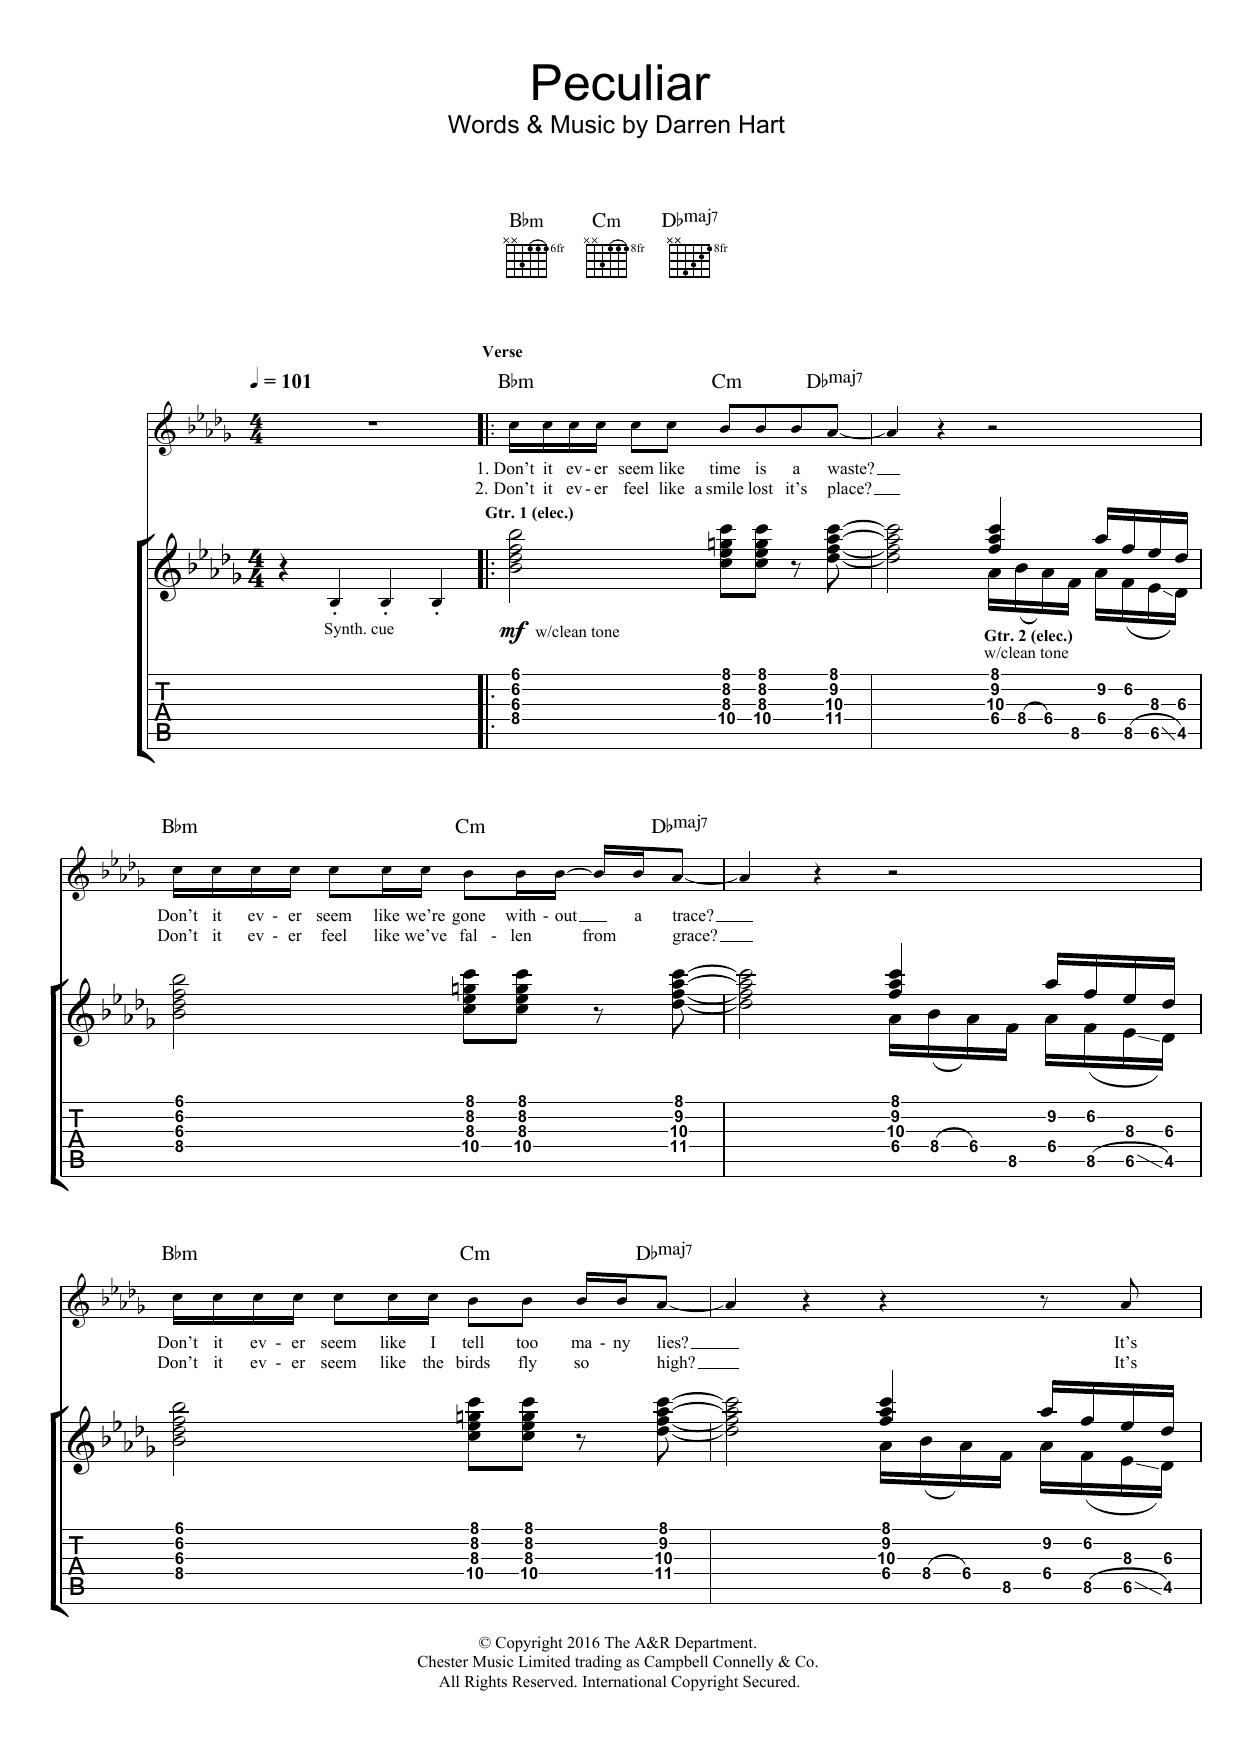 Harts Peculiar Sheet Music Notes & Chords for Guitar Tab - Download or Print PDF